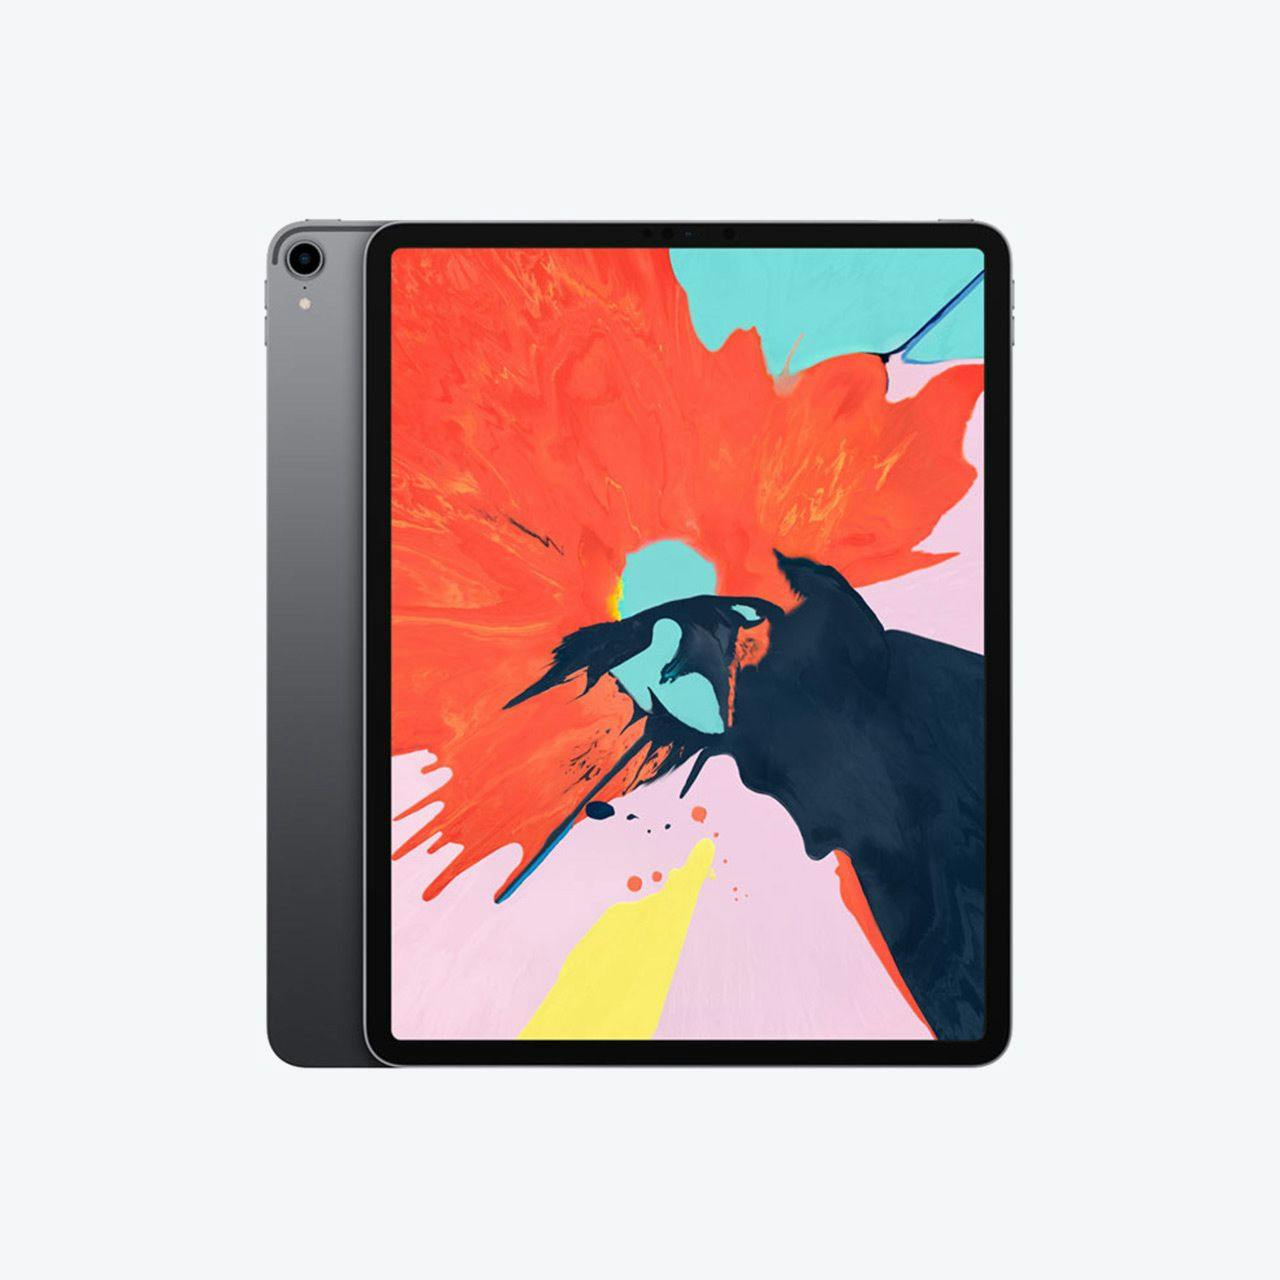 Image of iPad Pro 12.9-inch (3rd Generation).